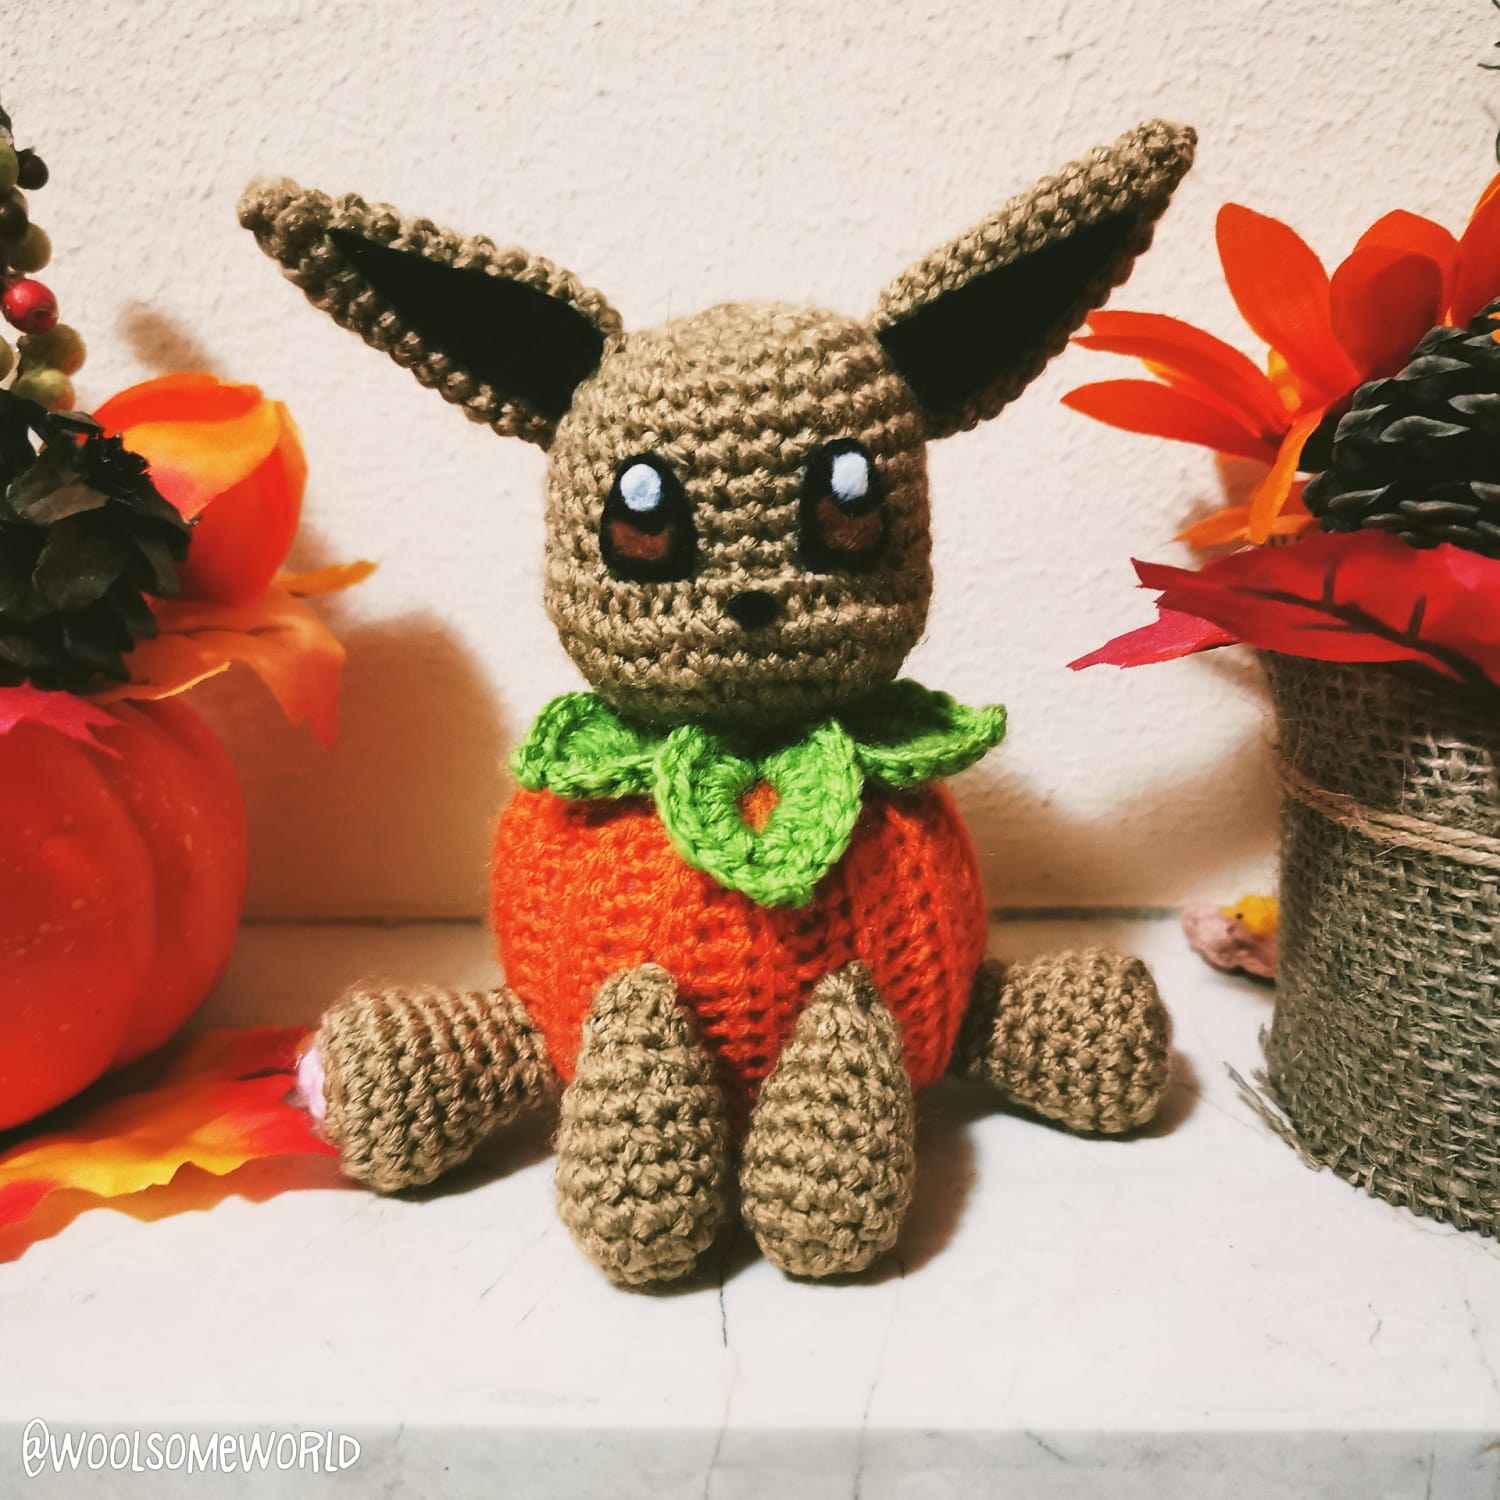 Happy 1rst of Hooktober! 🎃 I made a pumpkin Eevee!